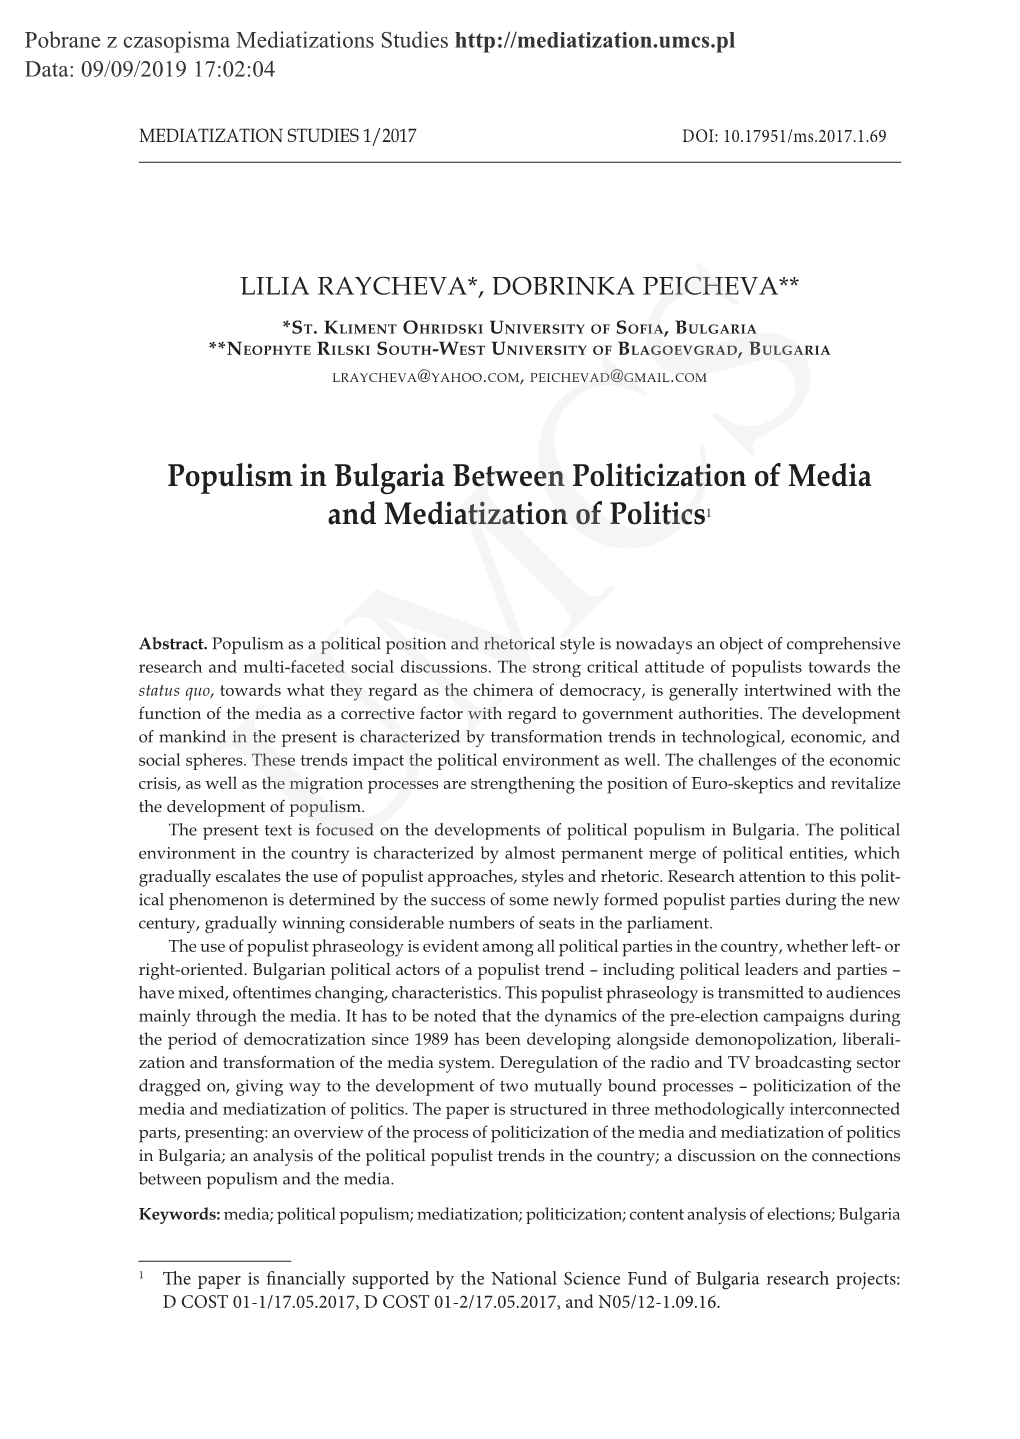 Populism in Bulgaria Between Politicization of Media and Mediatization of Politics1